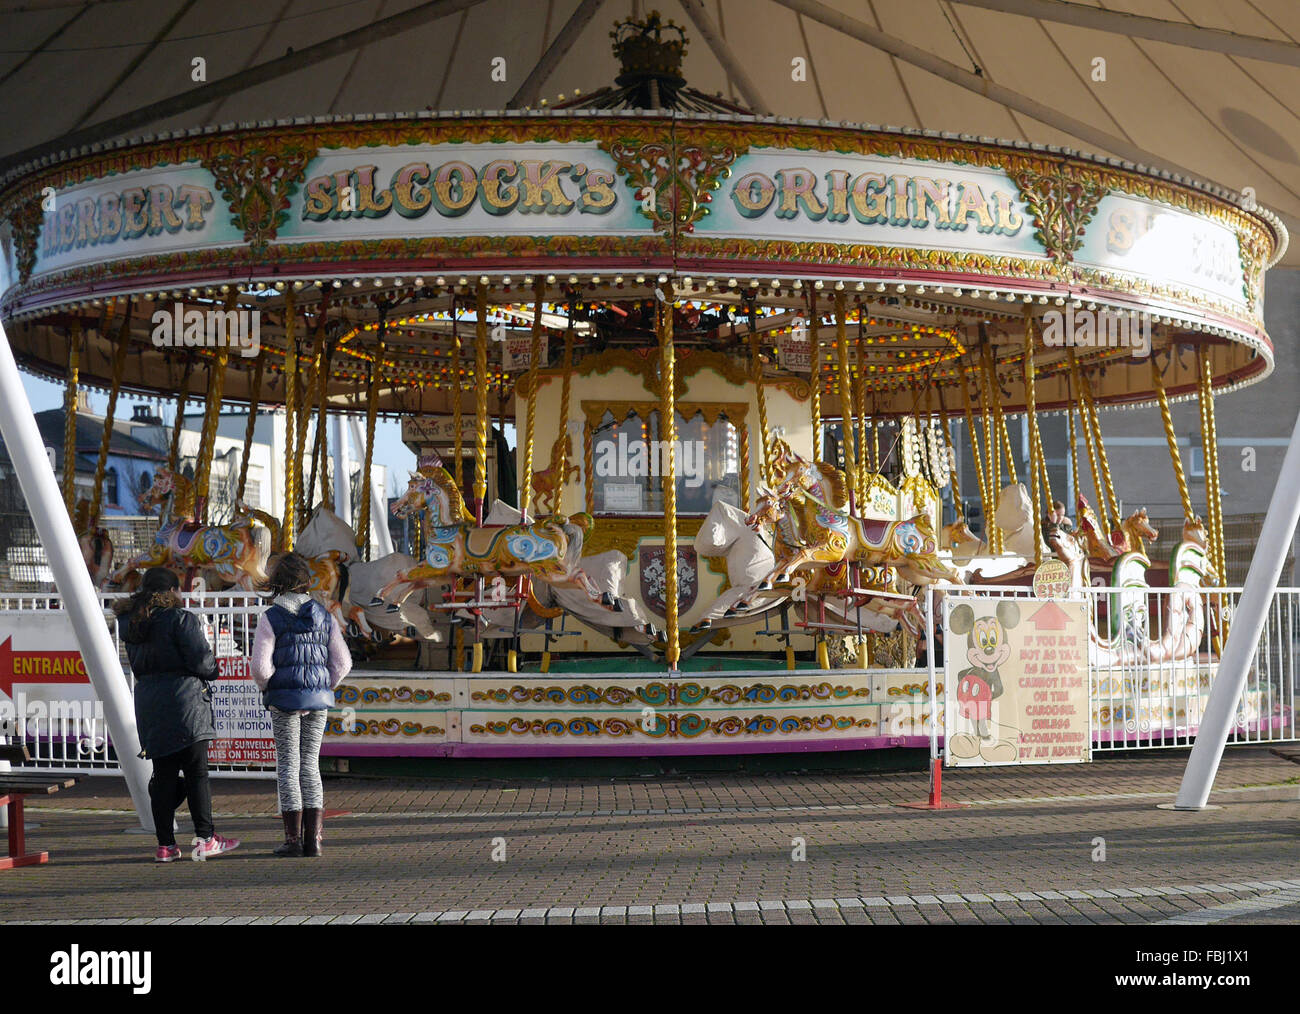 Funfair Carousal Southport Fair England UK. Stock Photo